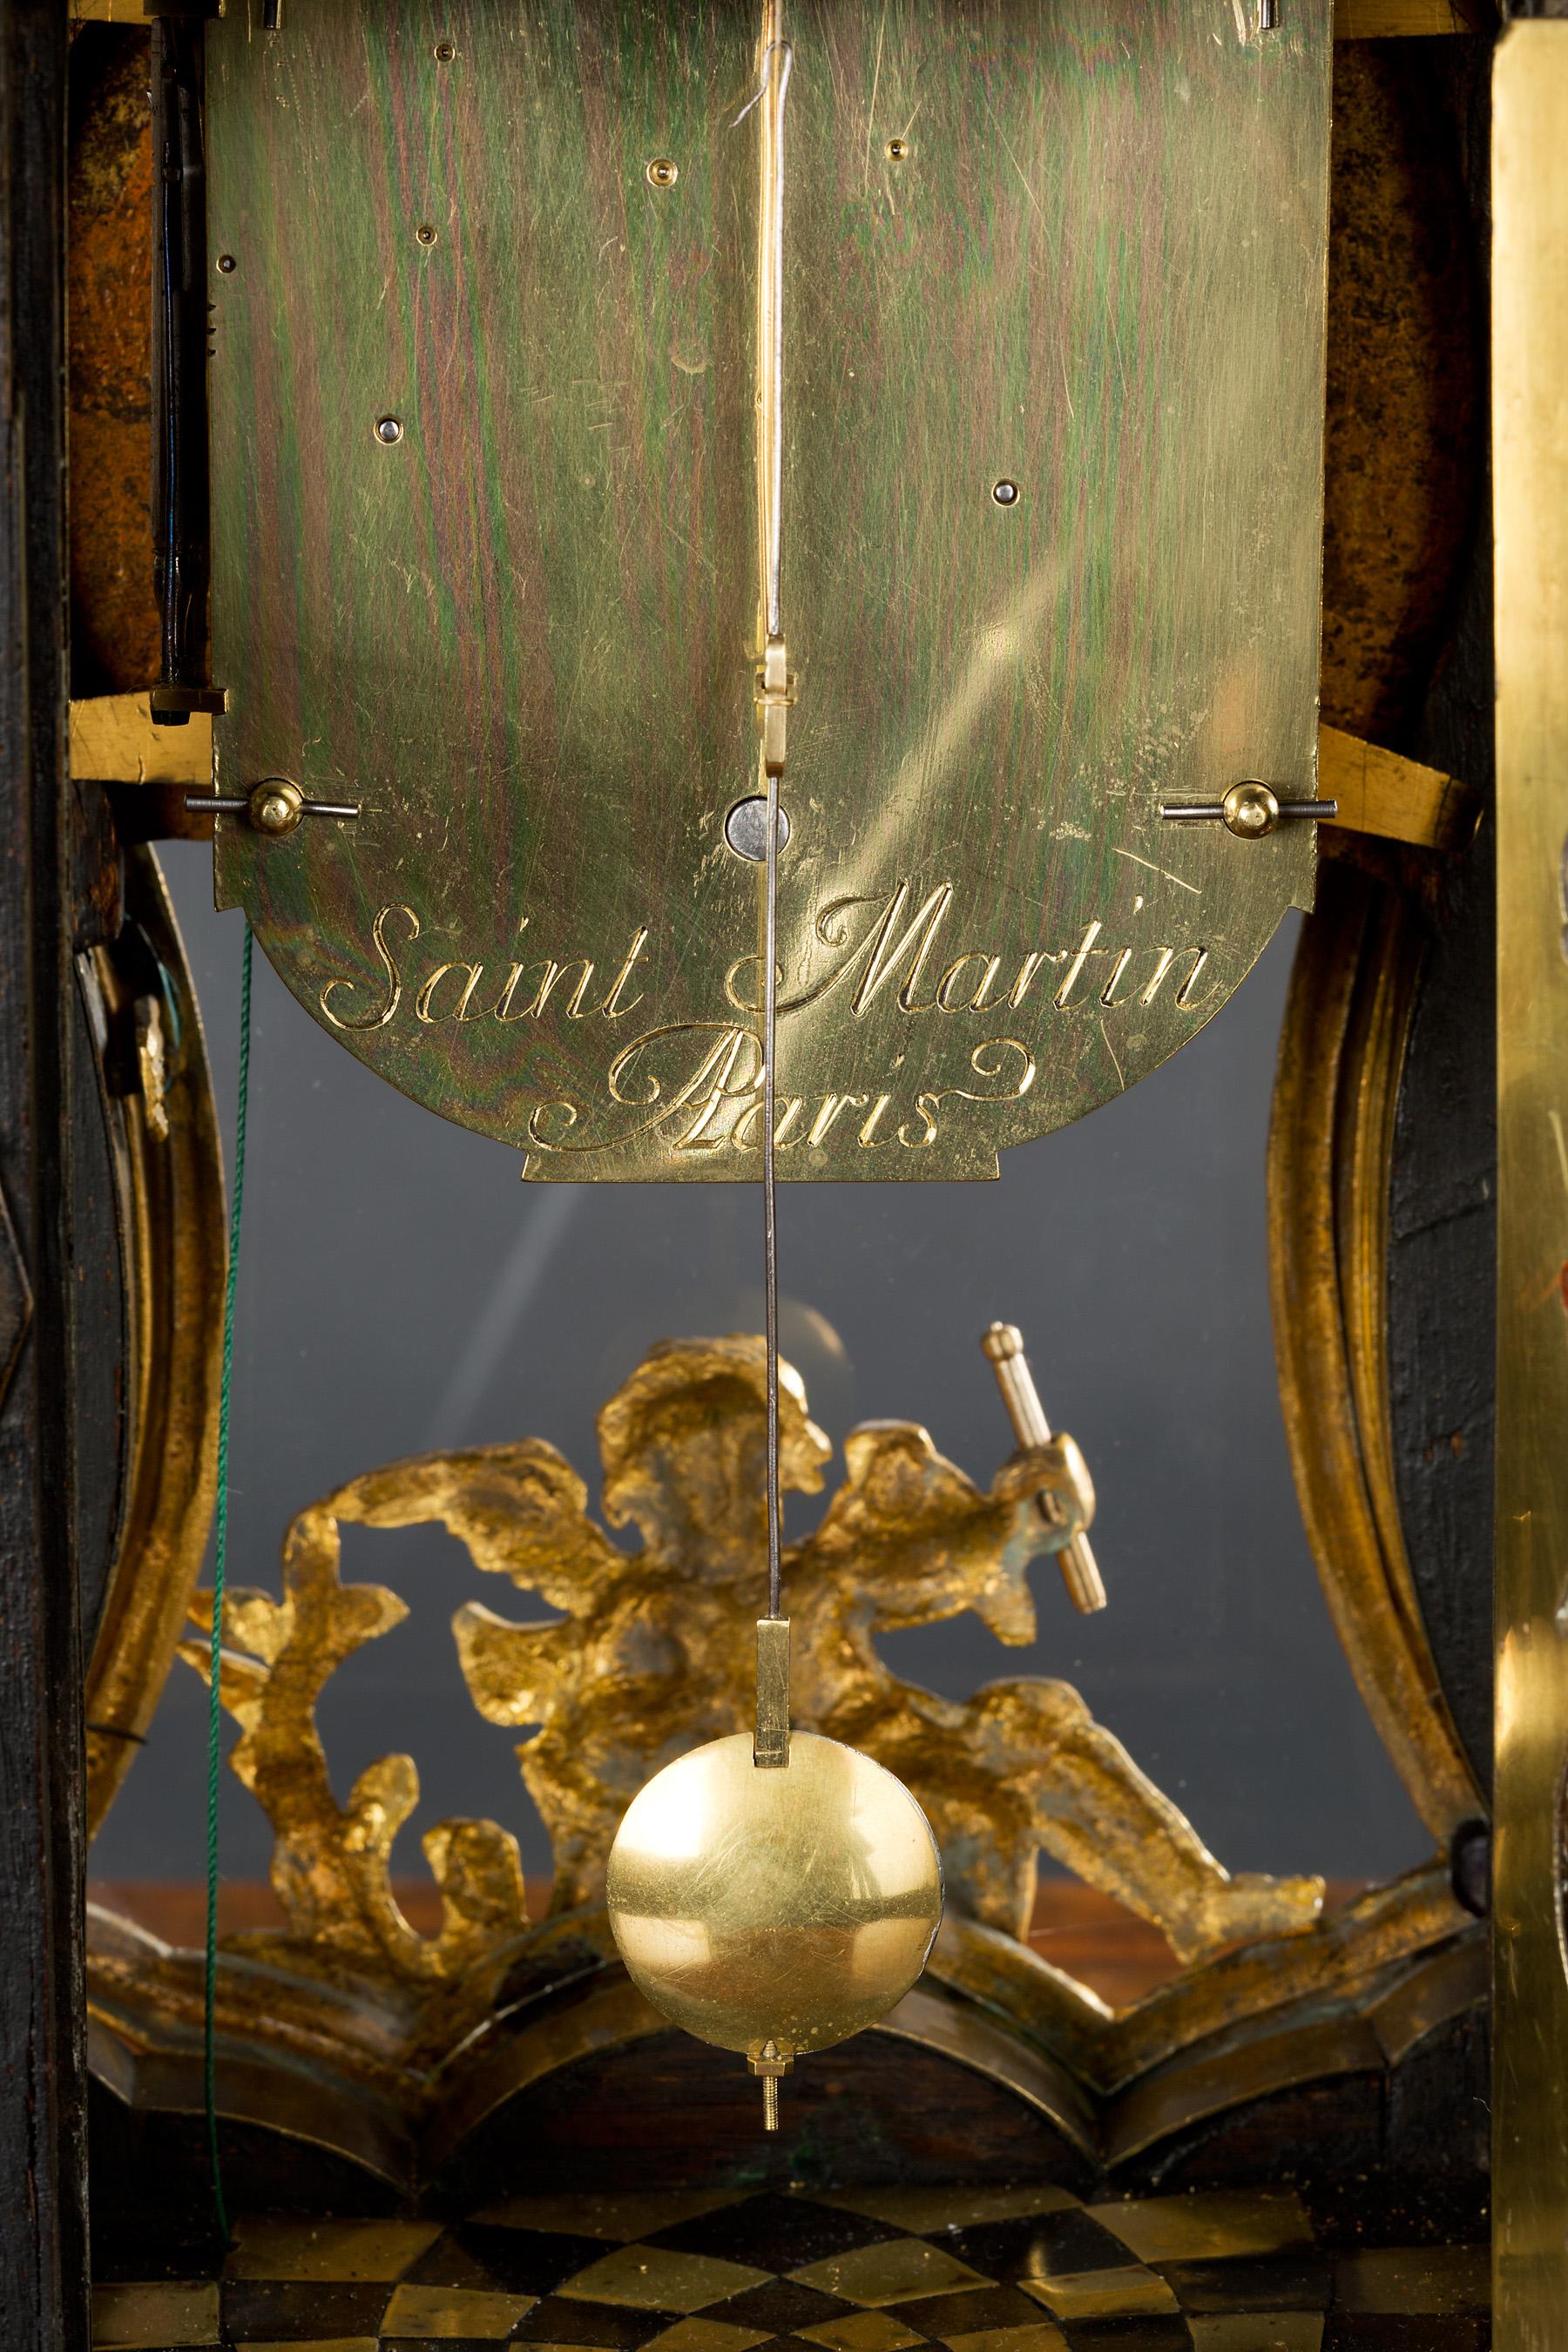 martin clock